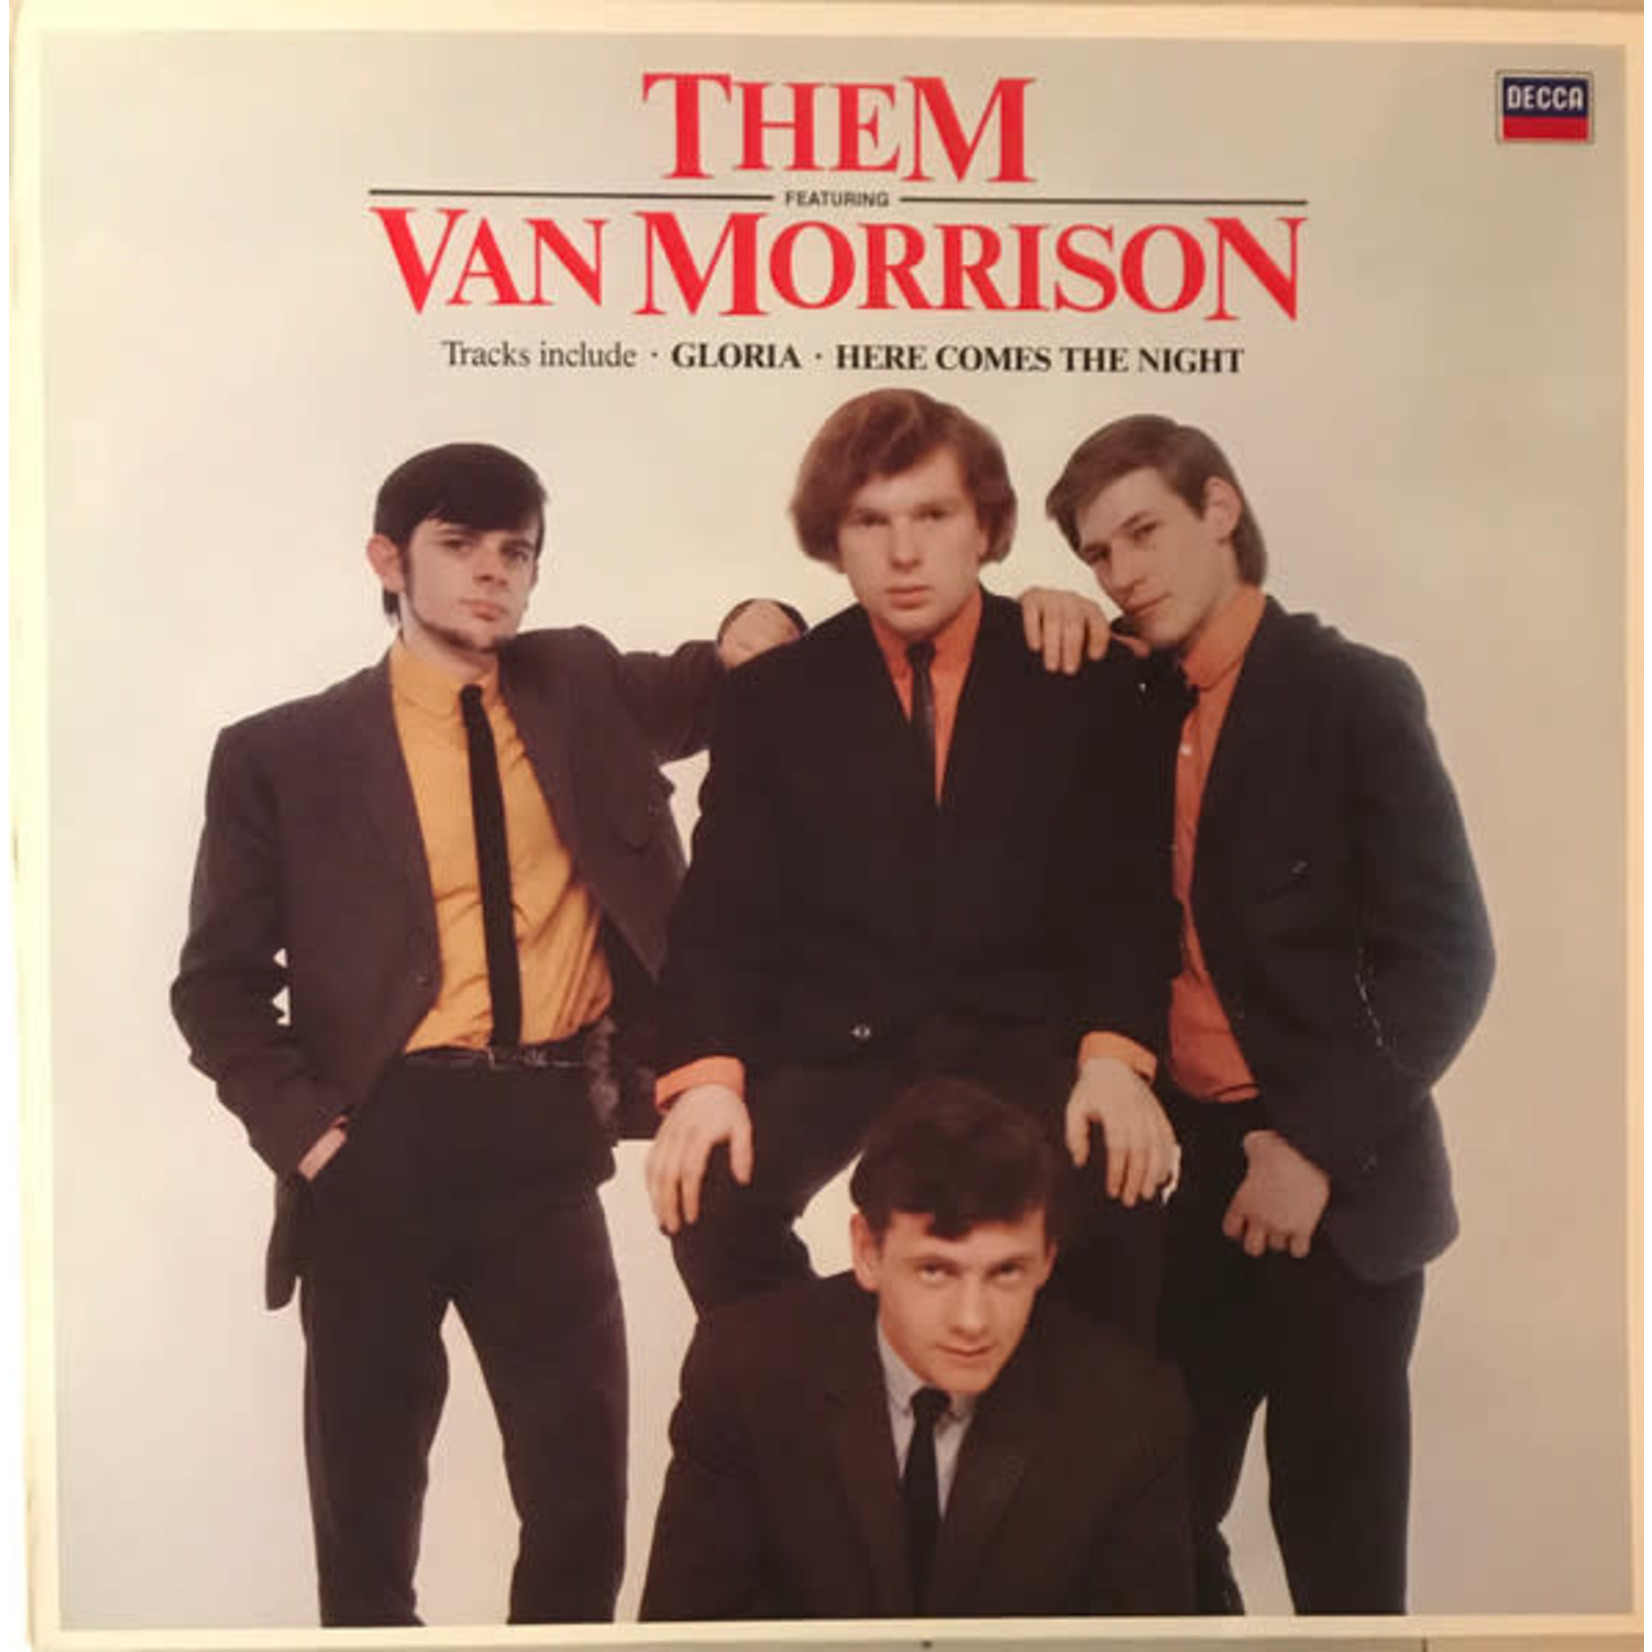 [Vintage] Them feat. Van Morrison - self-titled (1983, London/Decca compilation)